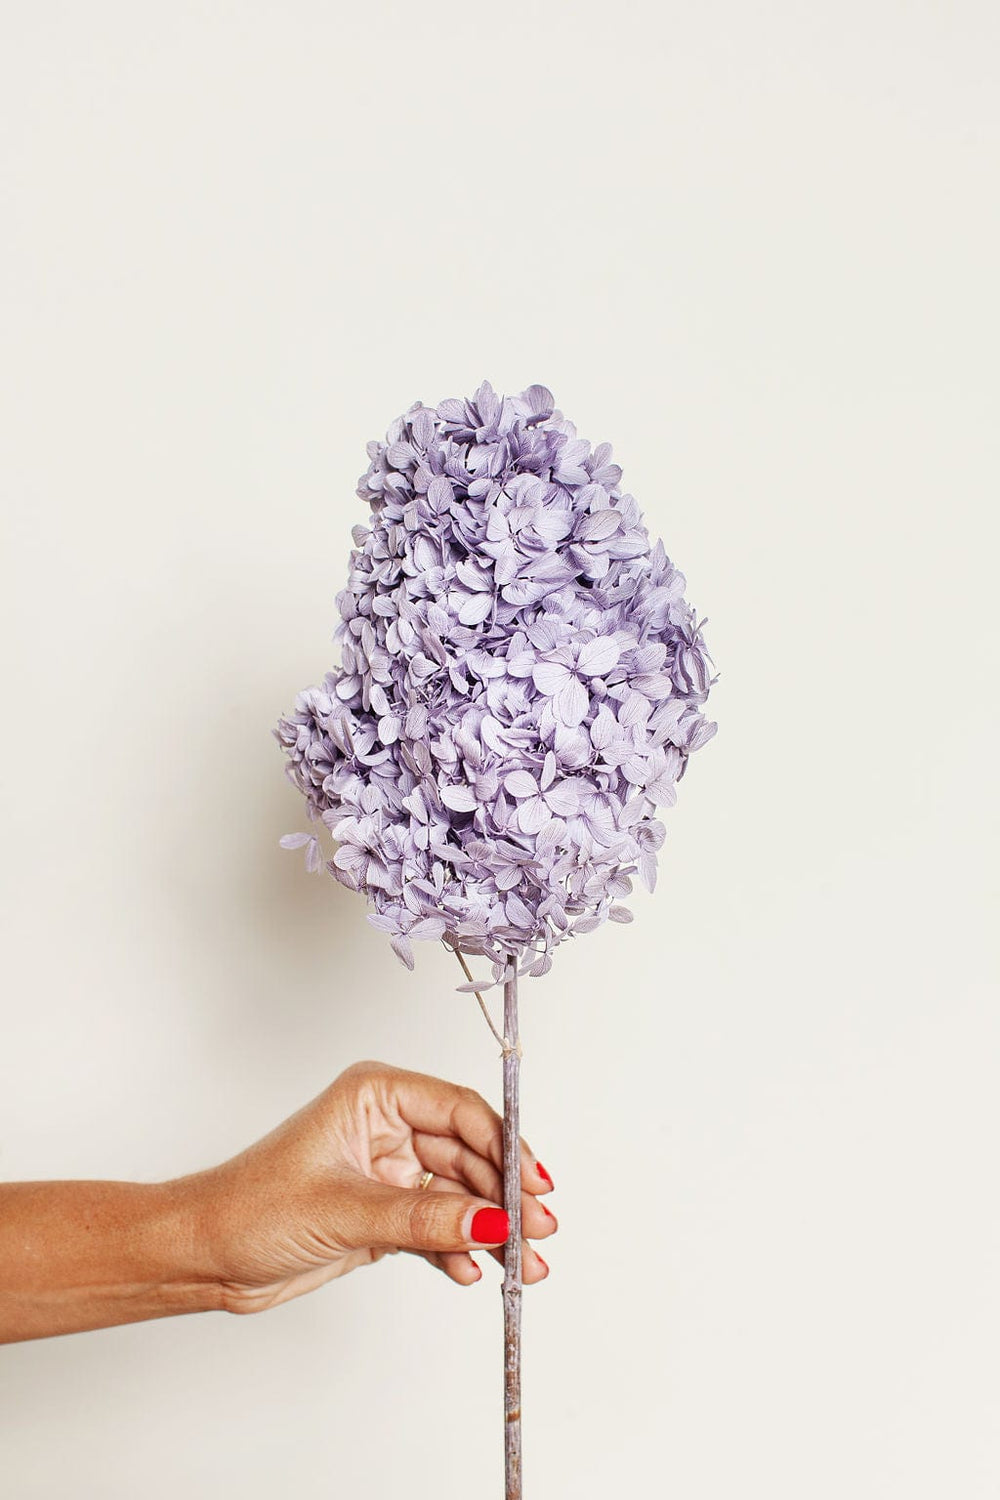 Idlewild Floral Co. Purple Pee Gee Hydrangea